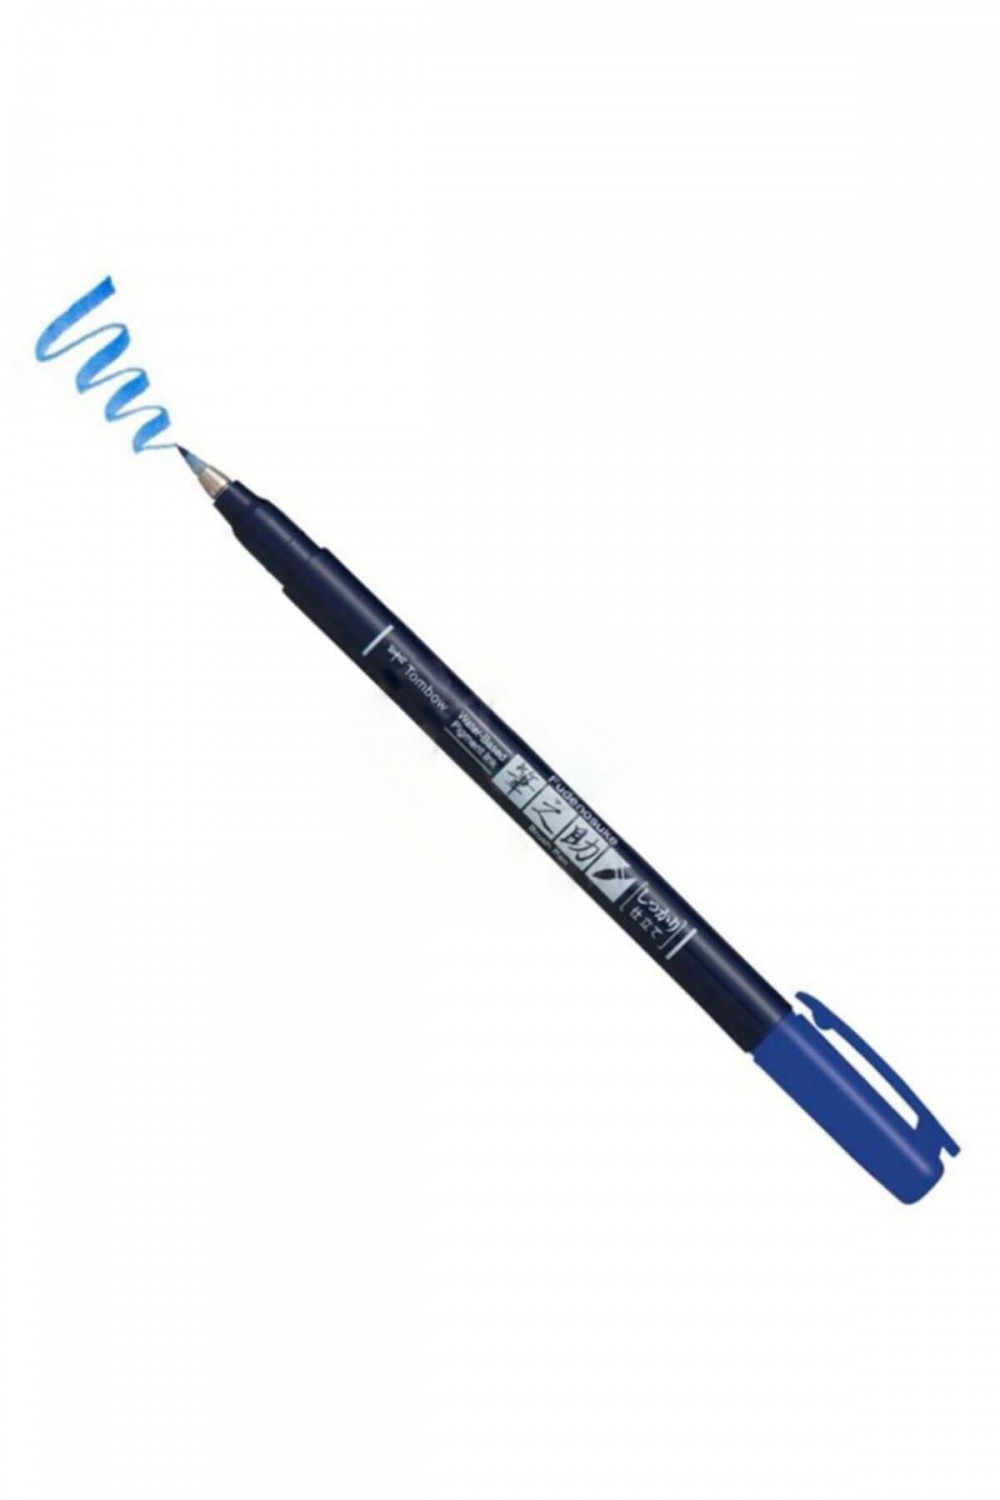 Tombow Fudenosuke Brush Pen Fırça Uçlu Kalem Sert Uç - Mavi